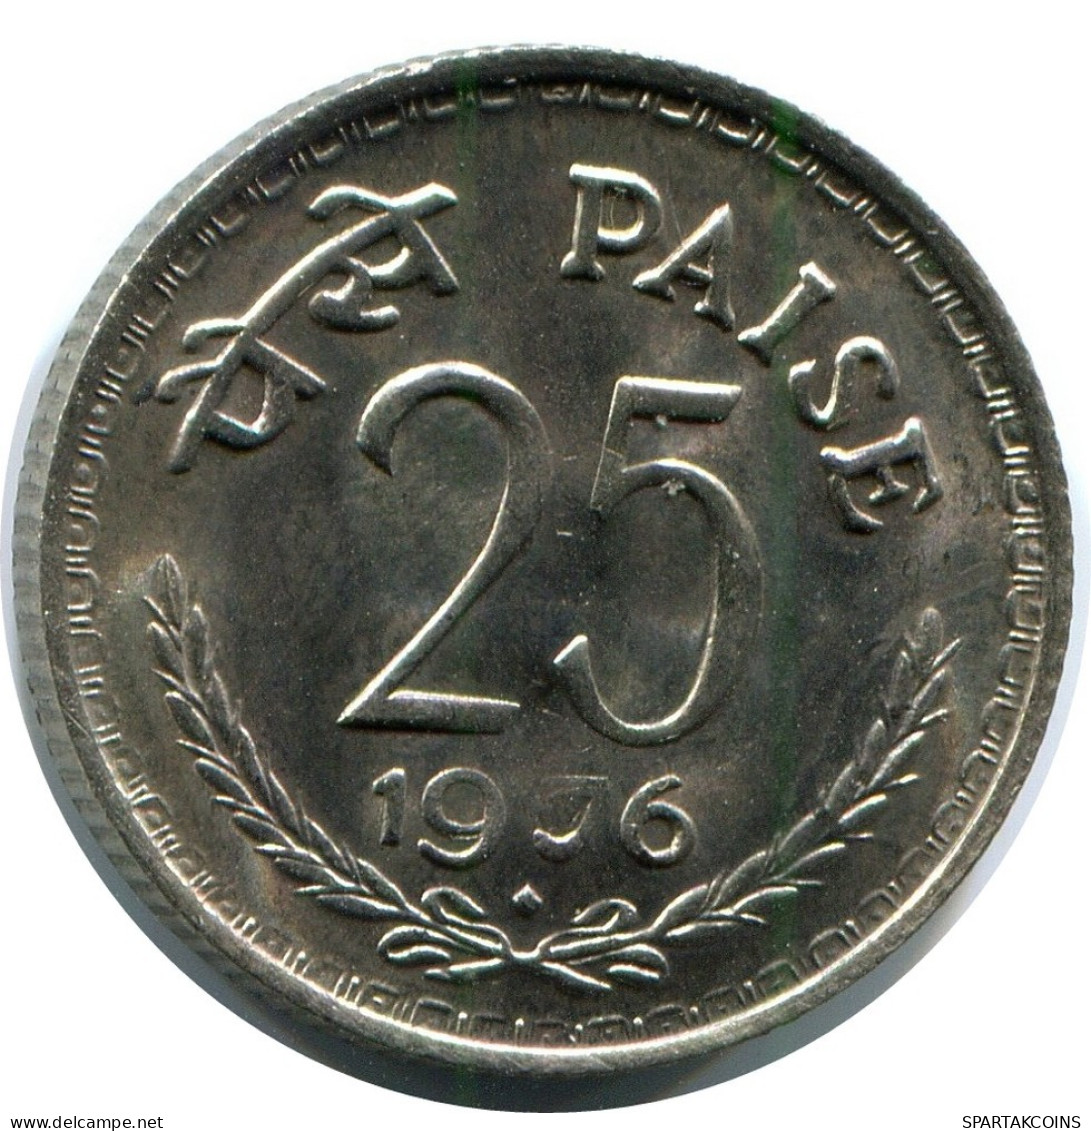 25 PIASE 1976 INDIEN INDIA Münze #AZ184.D.A - India